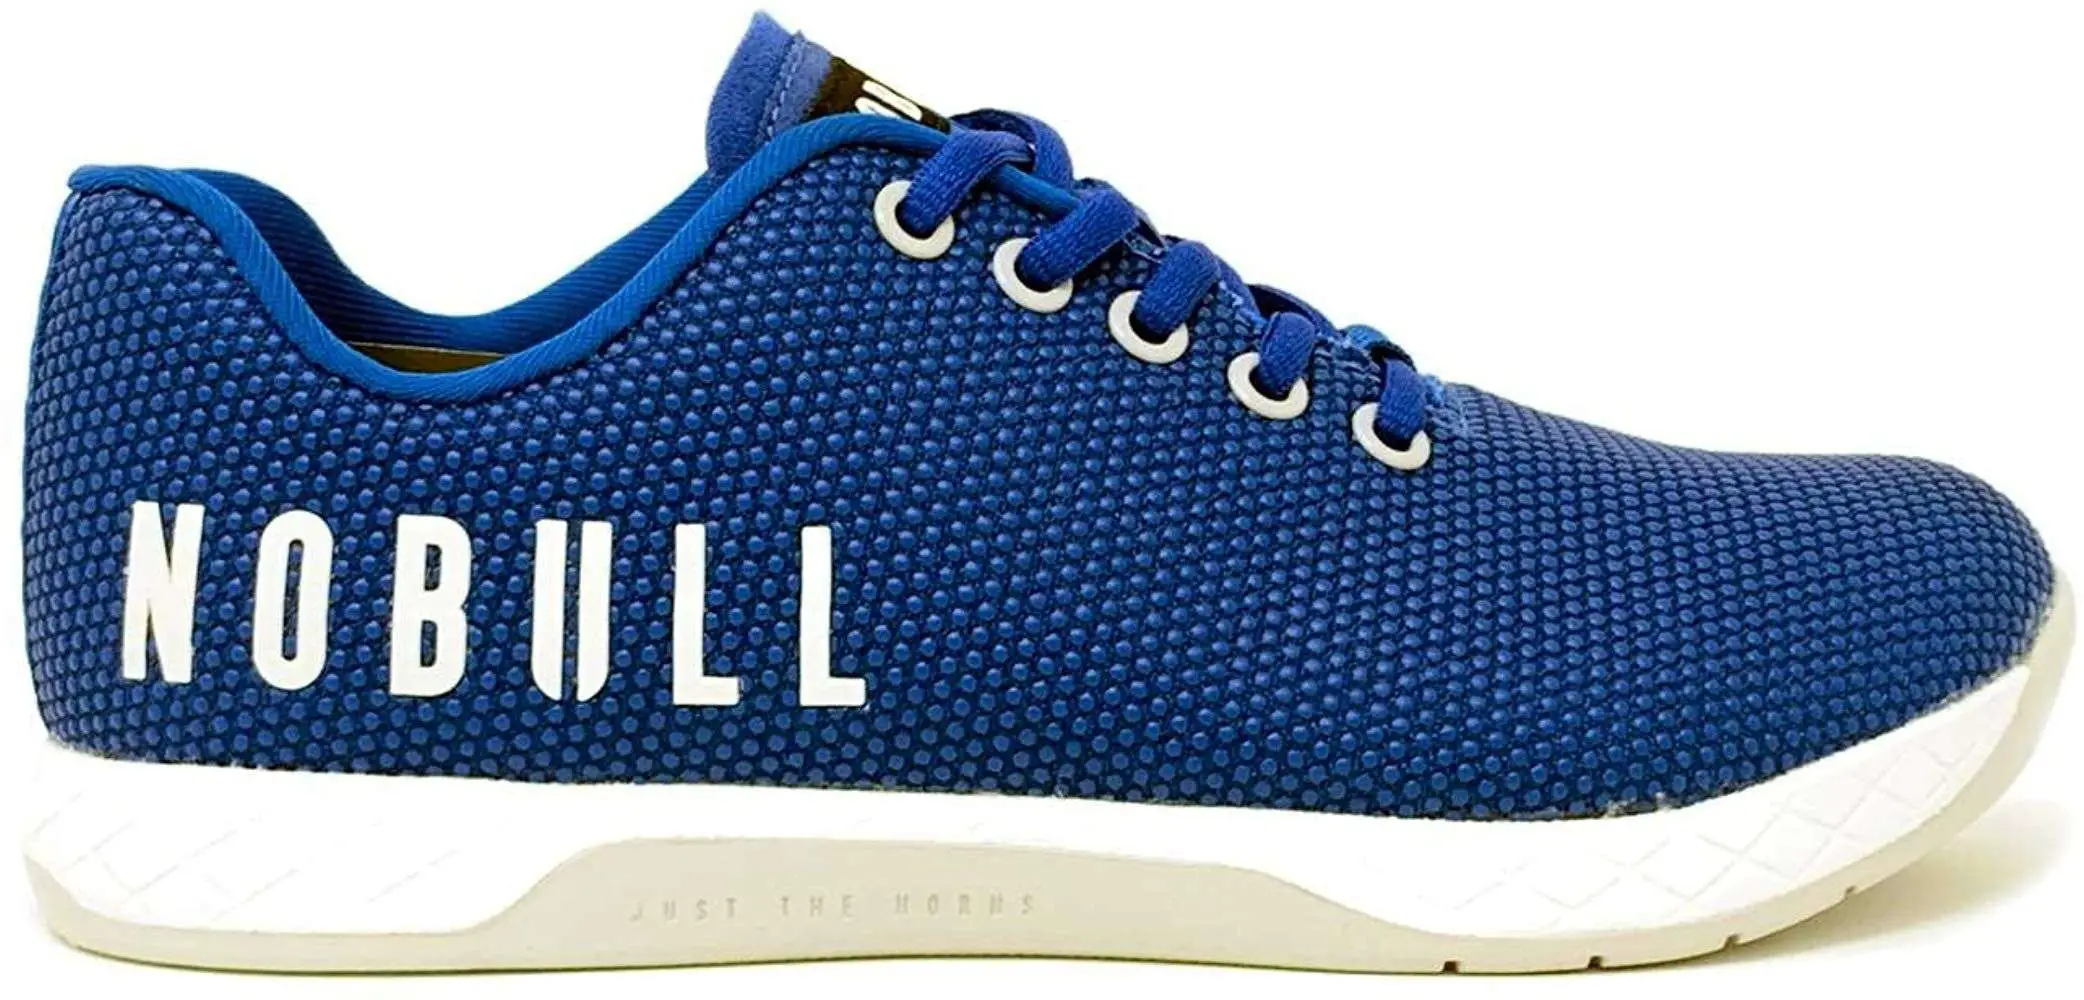 Nobull Shoes Superfabric Trainer, 40, Dark Blue: Amazon.co ...